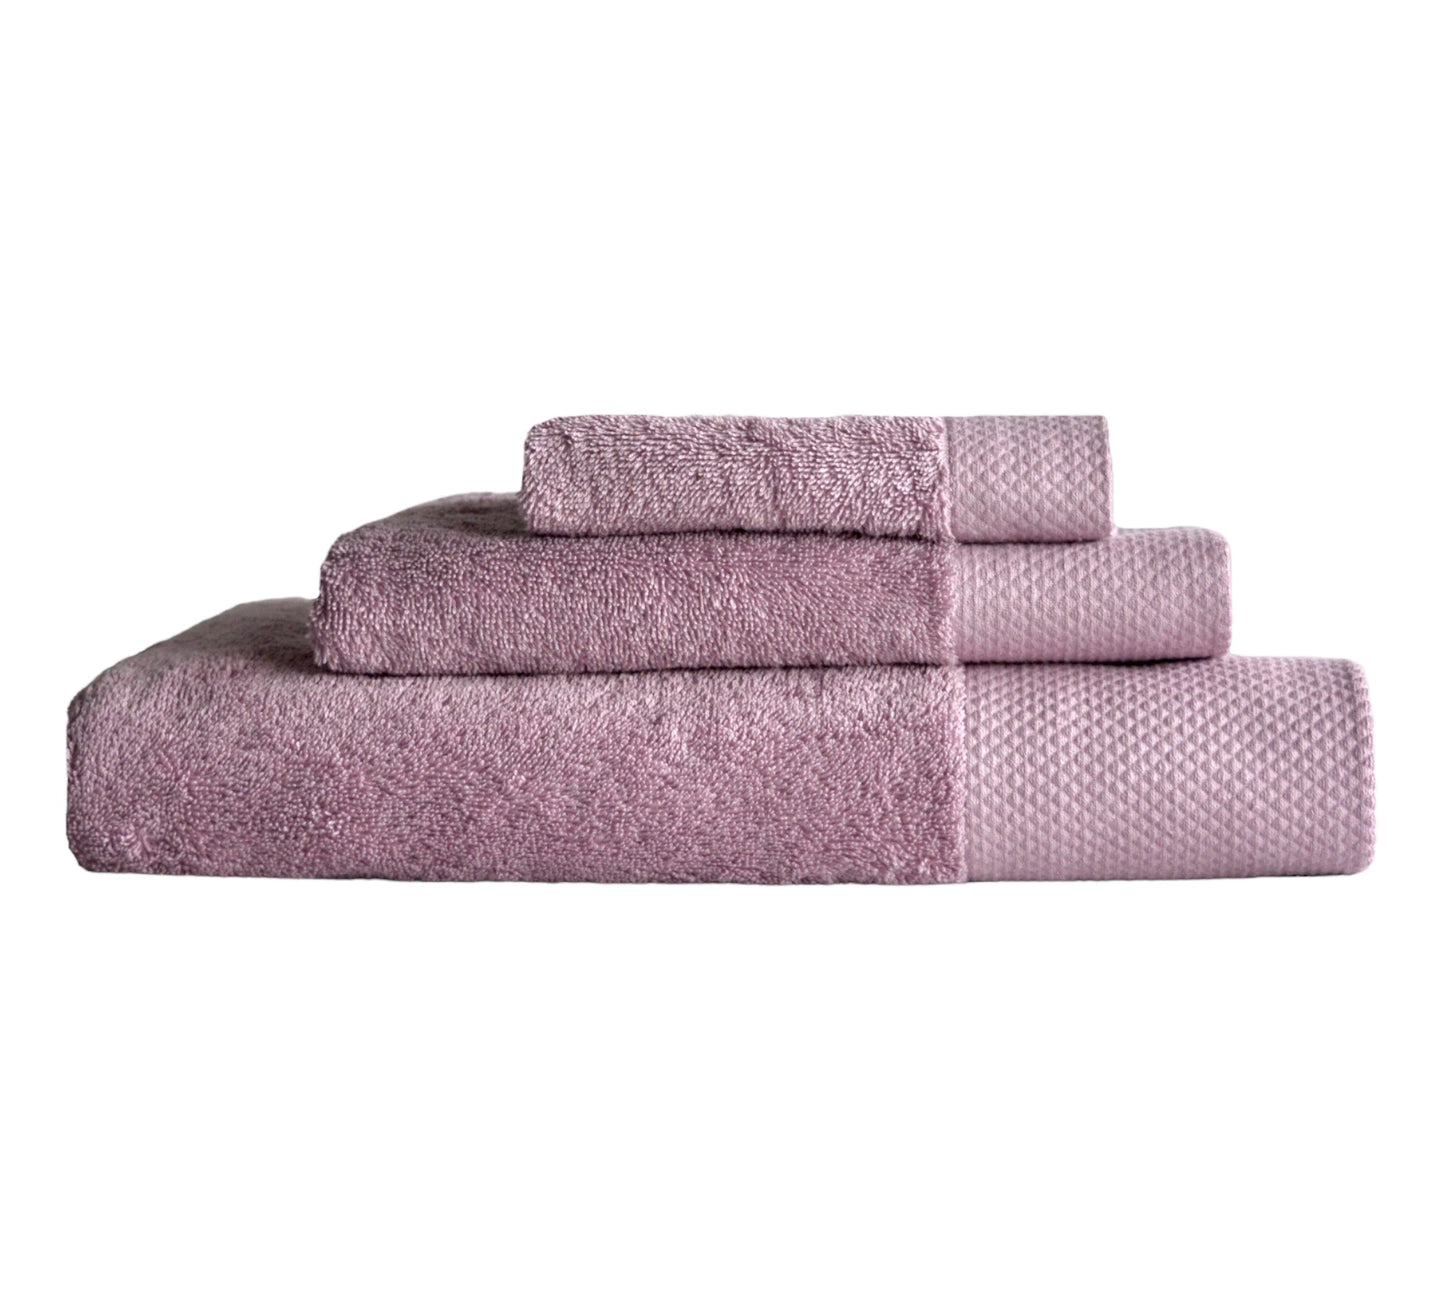 Cotton towels in Lilac Haze color